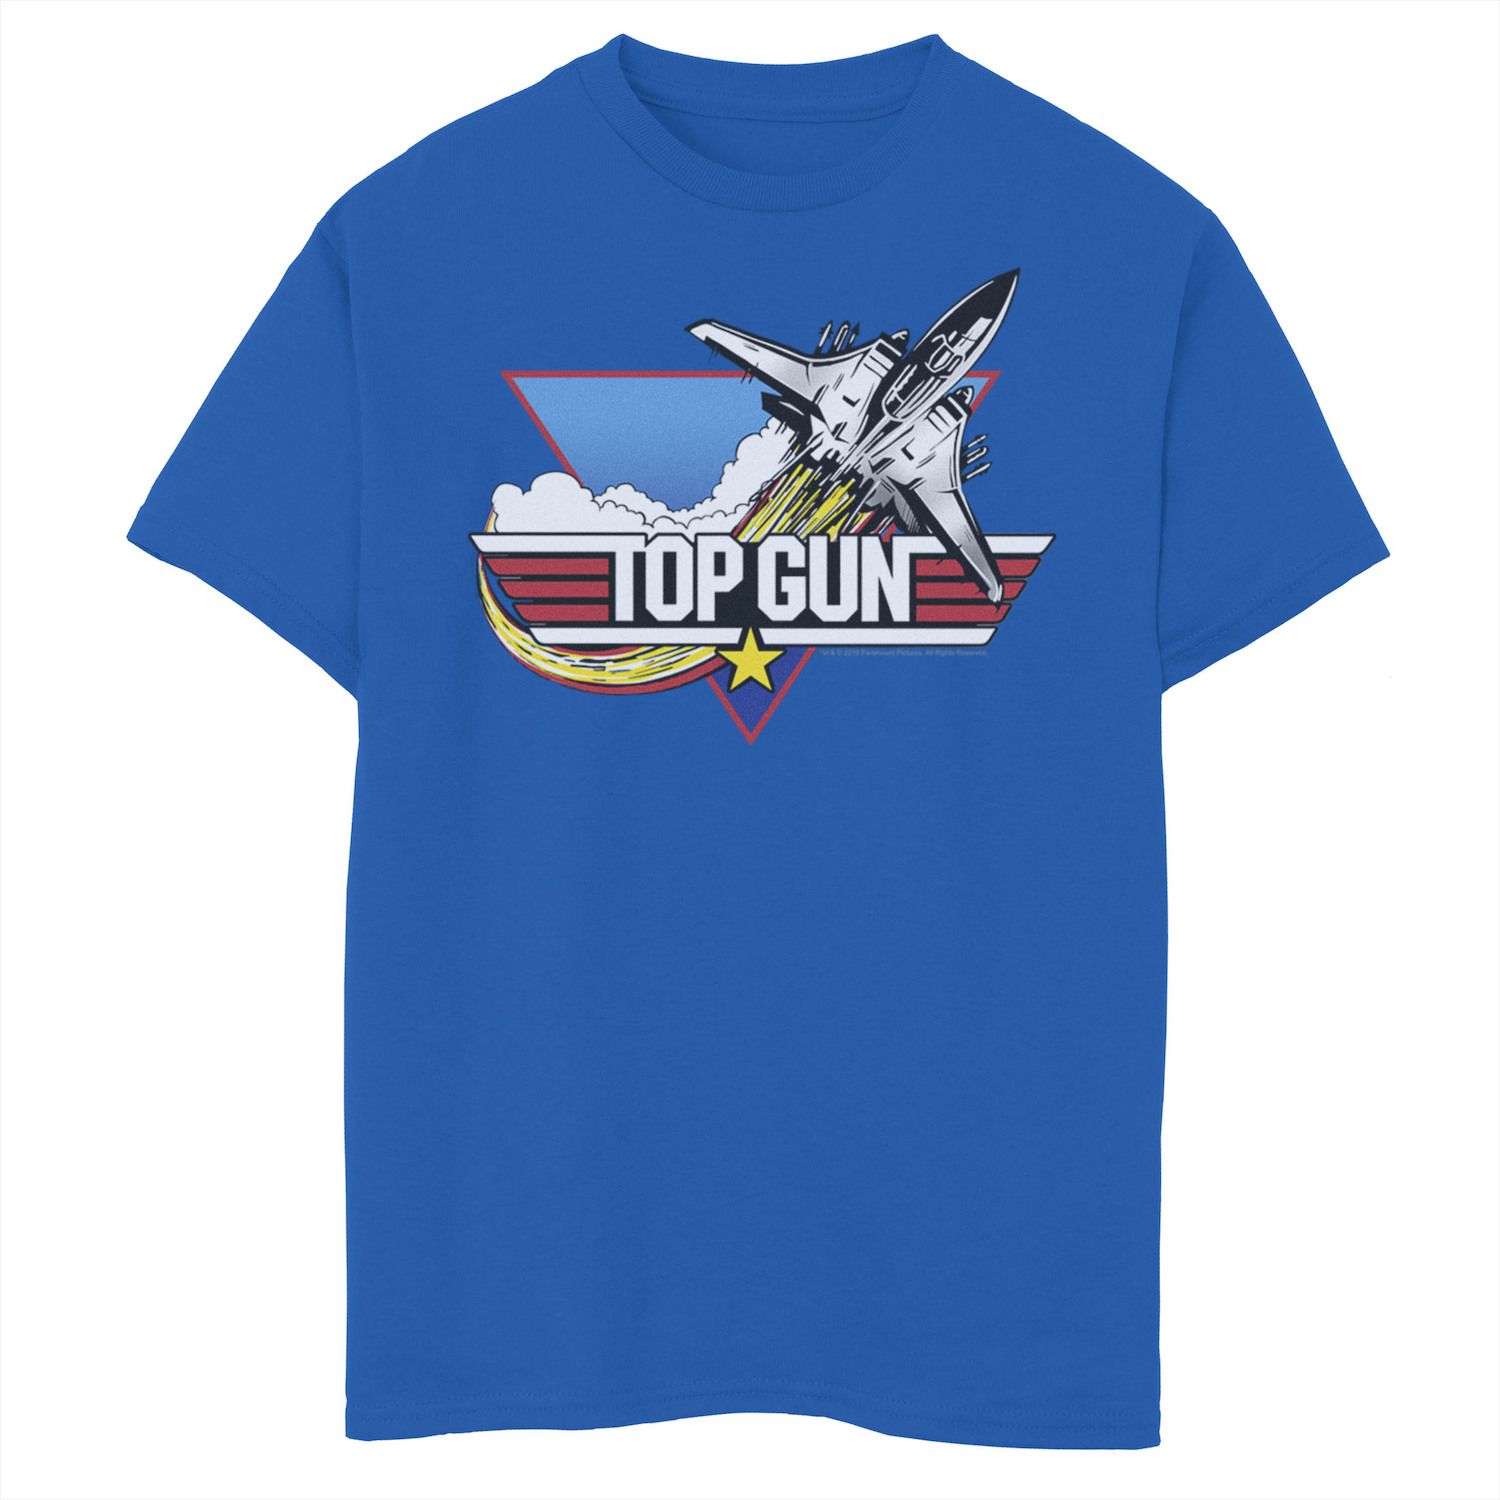 Top Gun: Maverick Women's Test Pilor Maverick Graphic Tshirt, Black, Small, Cotton